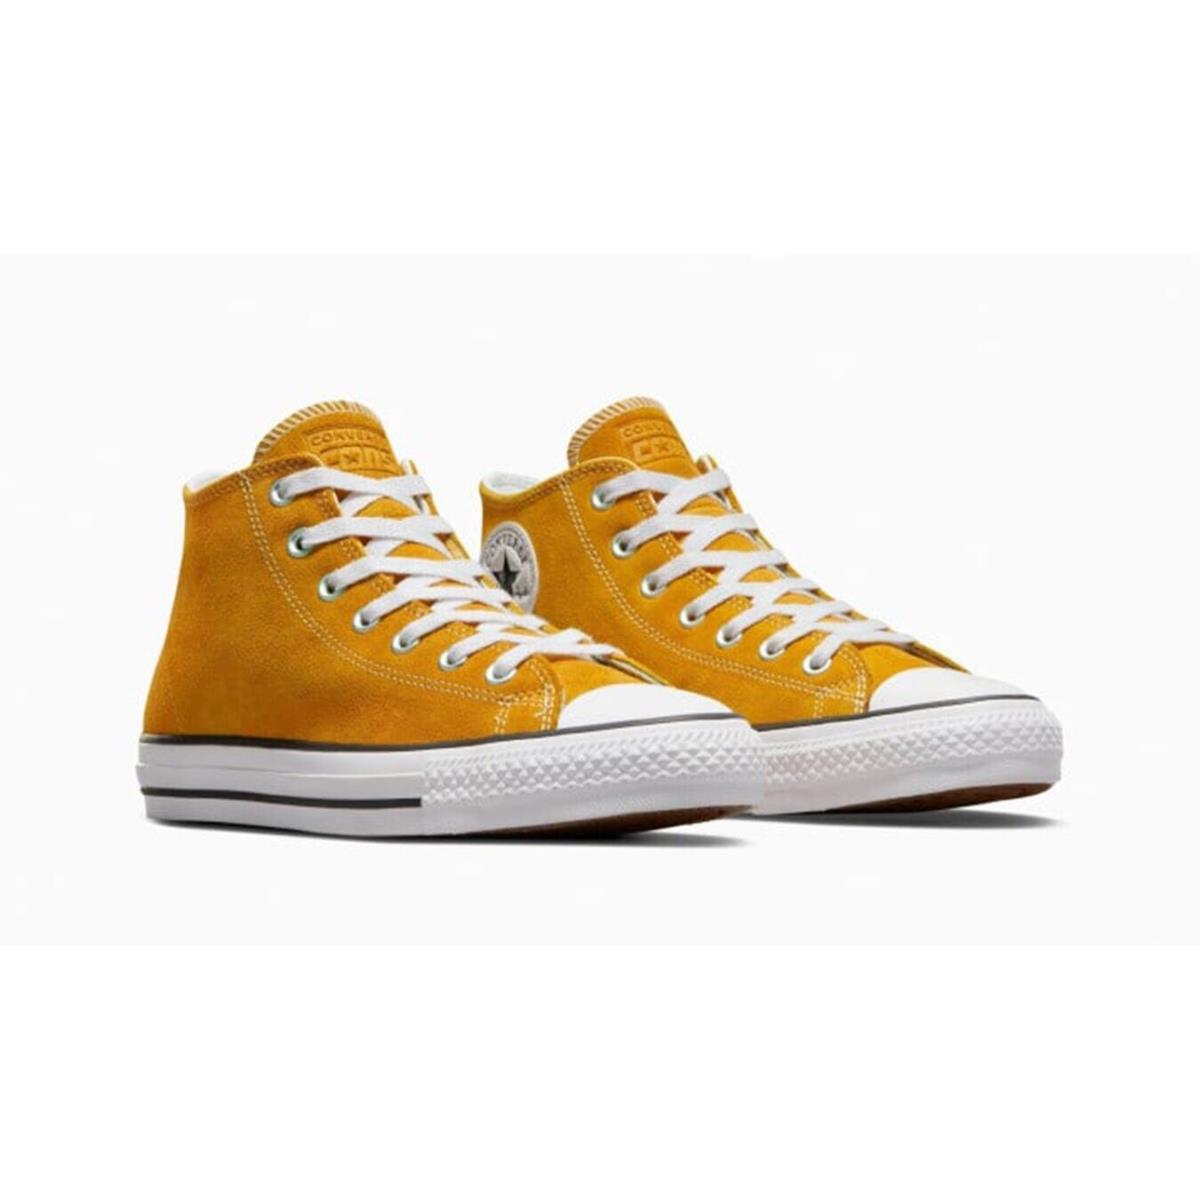 Converse Chuck Taylor All Star Pro A04602C Men`s Sunflower Gold Shoes 12 WOO119 - Sunflower Gold